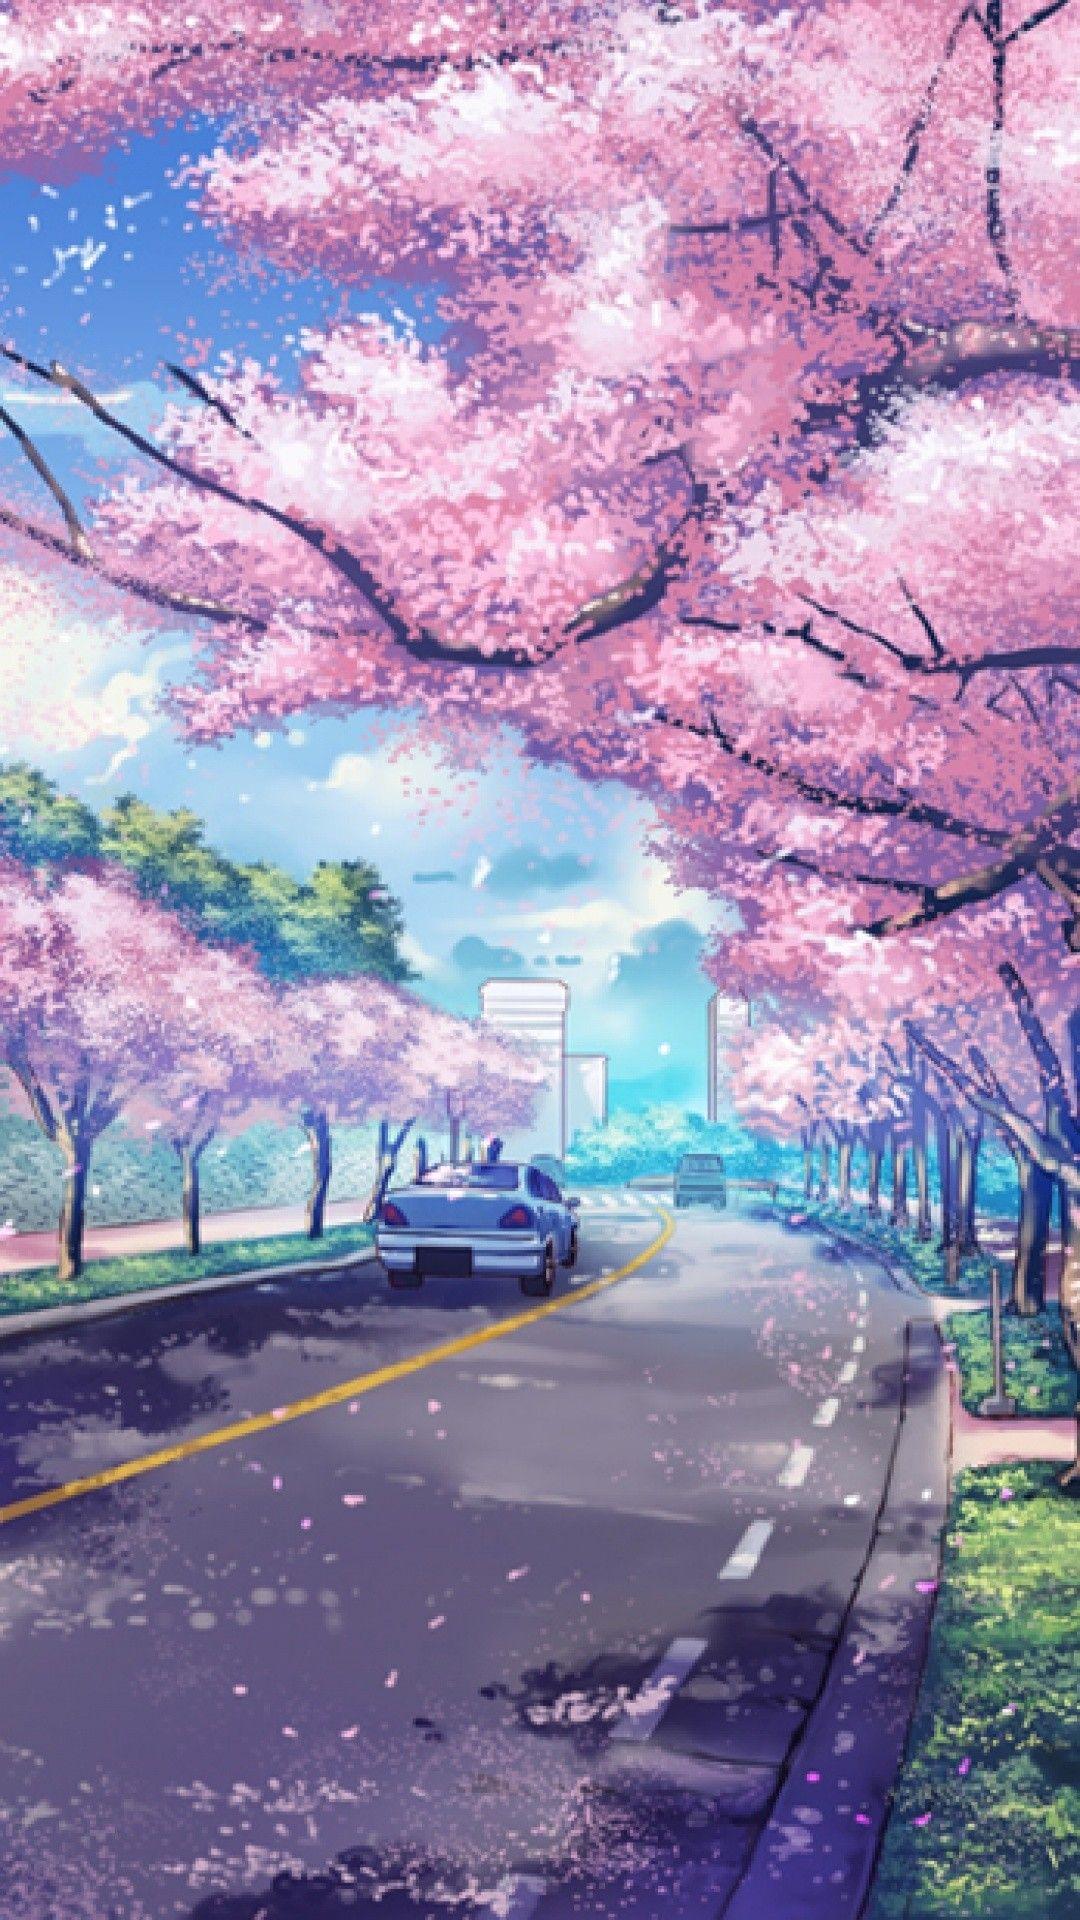 Background Anime Aesthetic / Sad Aesthetic Anime 1920x1080 Wallpapers